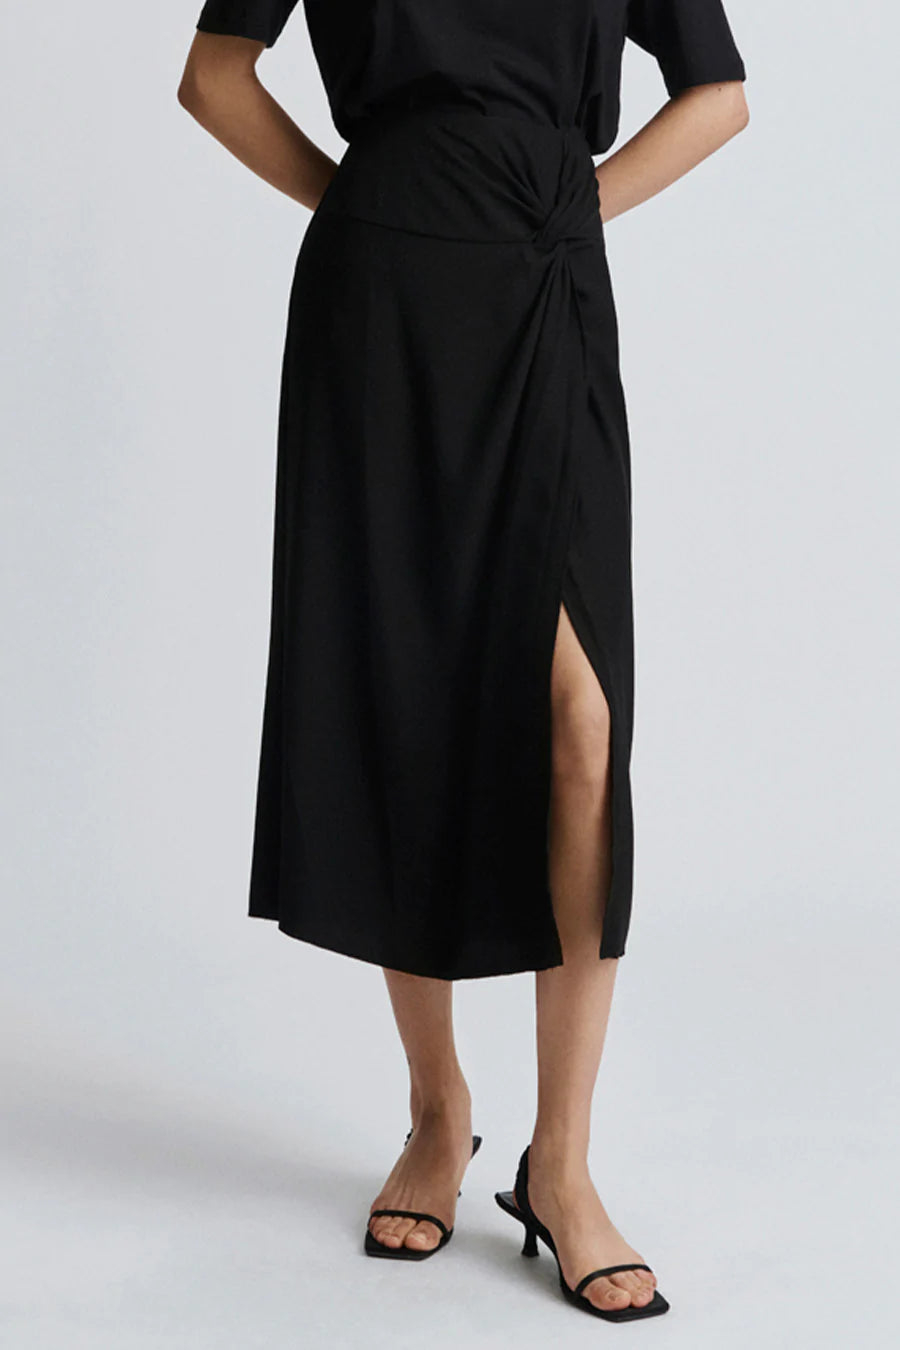 Stylein Modena Skirt Black